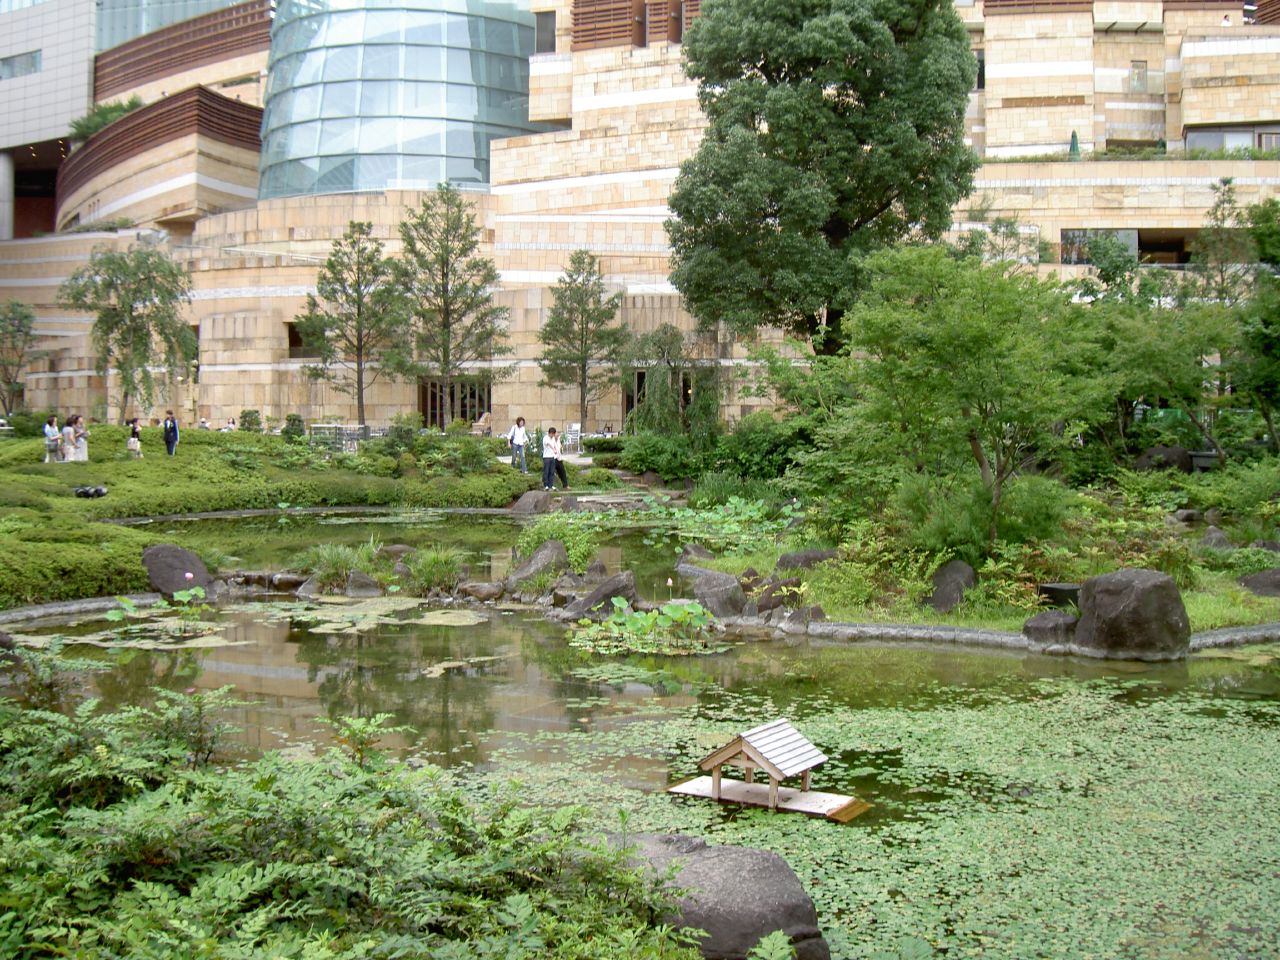 Mori Art Museum Garden in Tokyo. Photo by <a href="http://www.flickr.com/photos/hawk684/187966408/">hawk684</a>